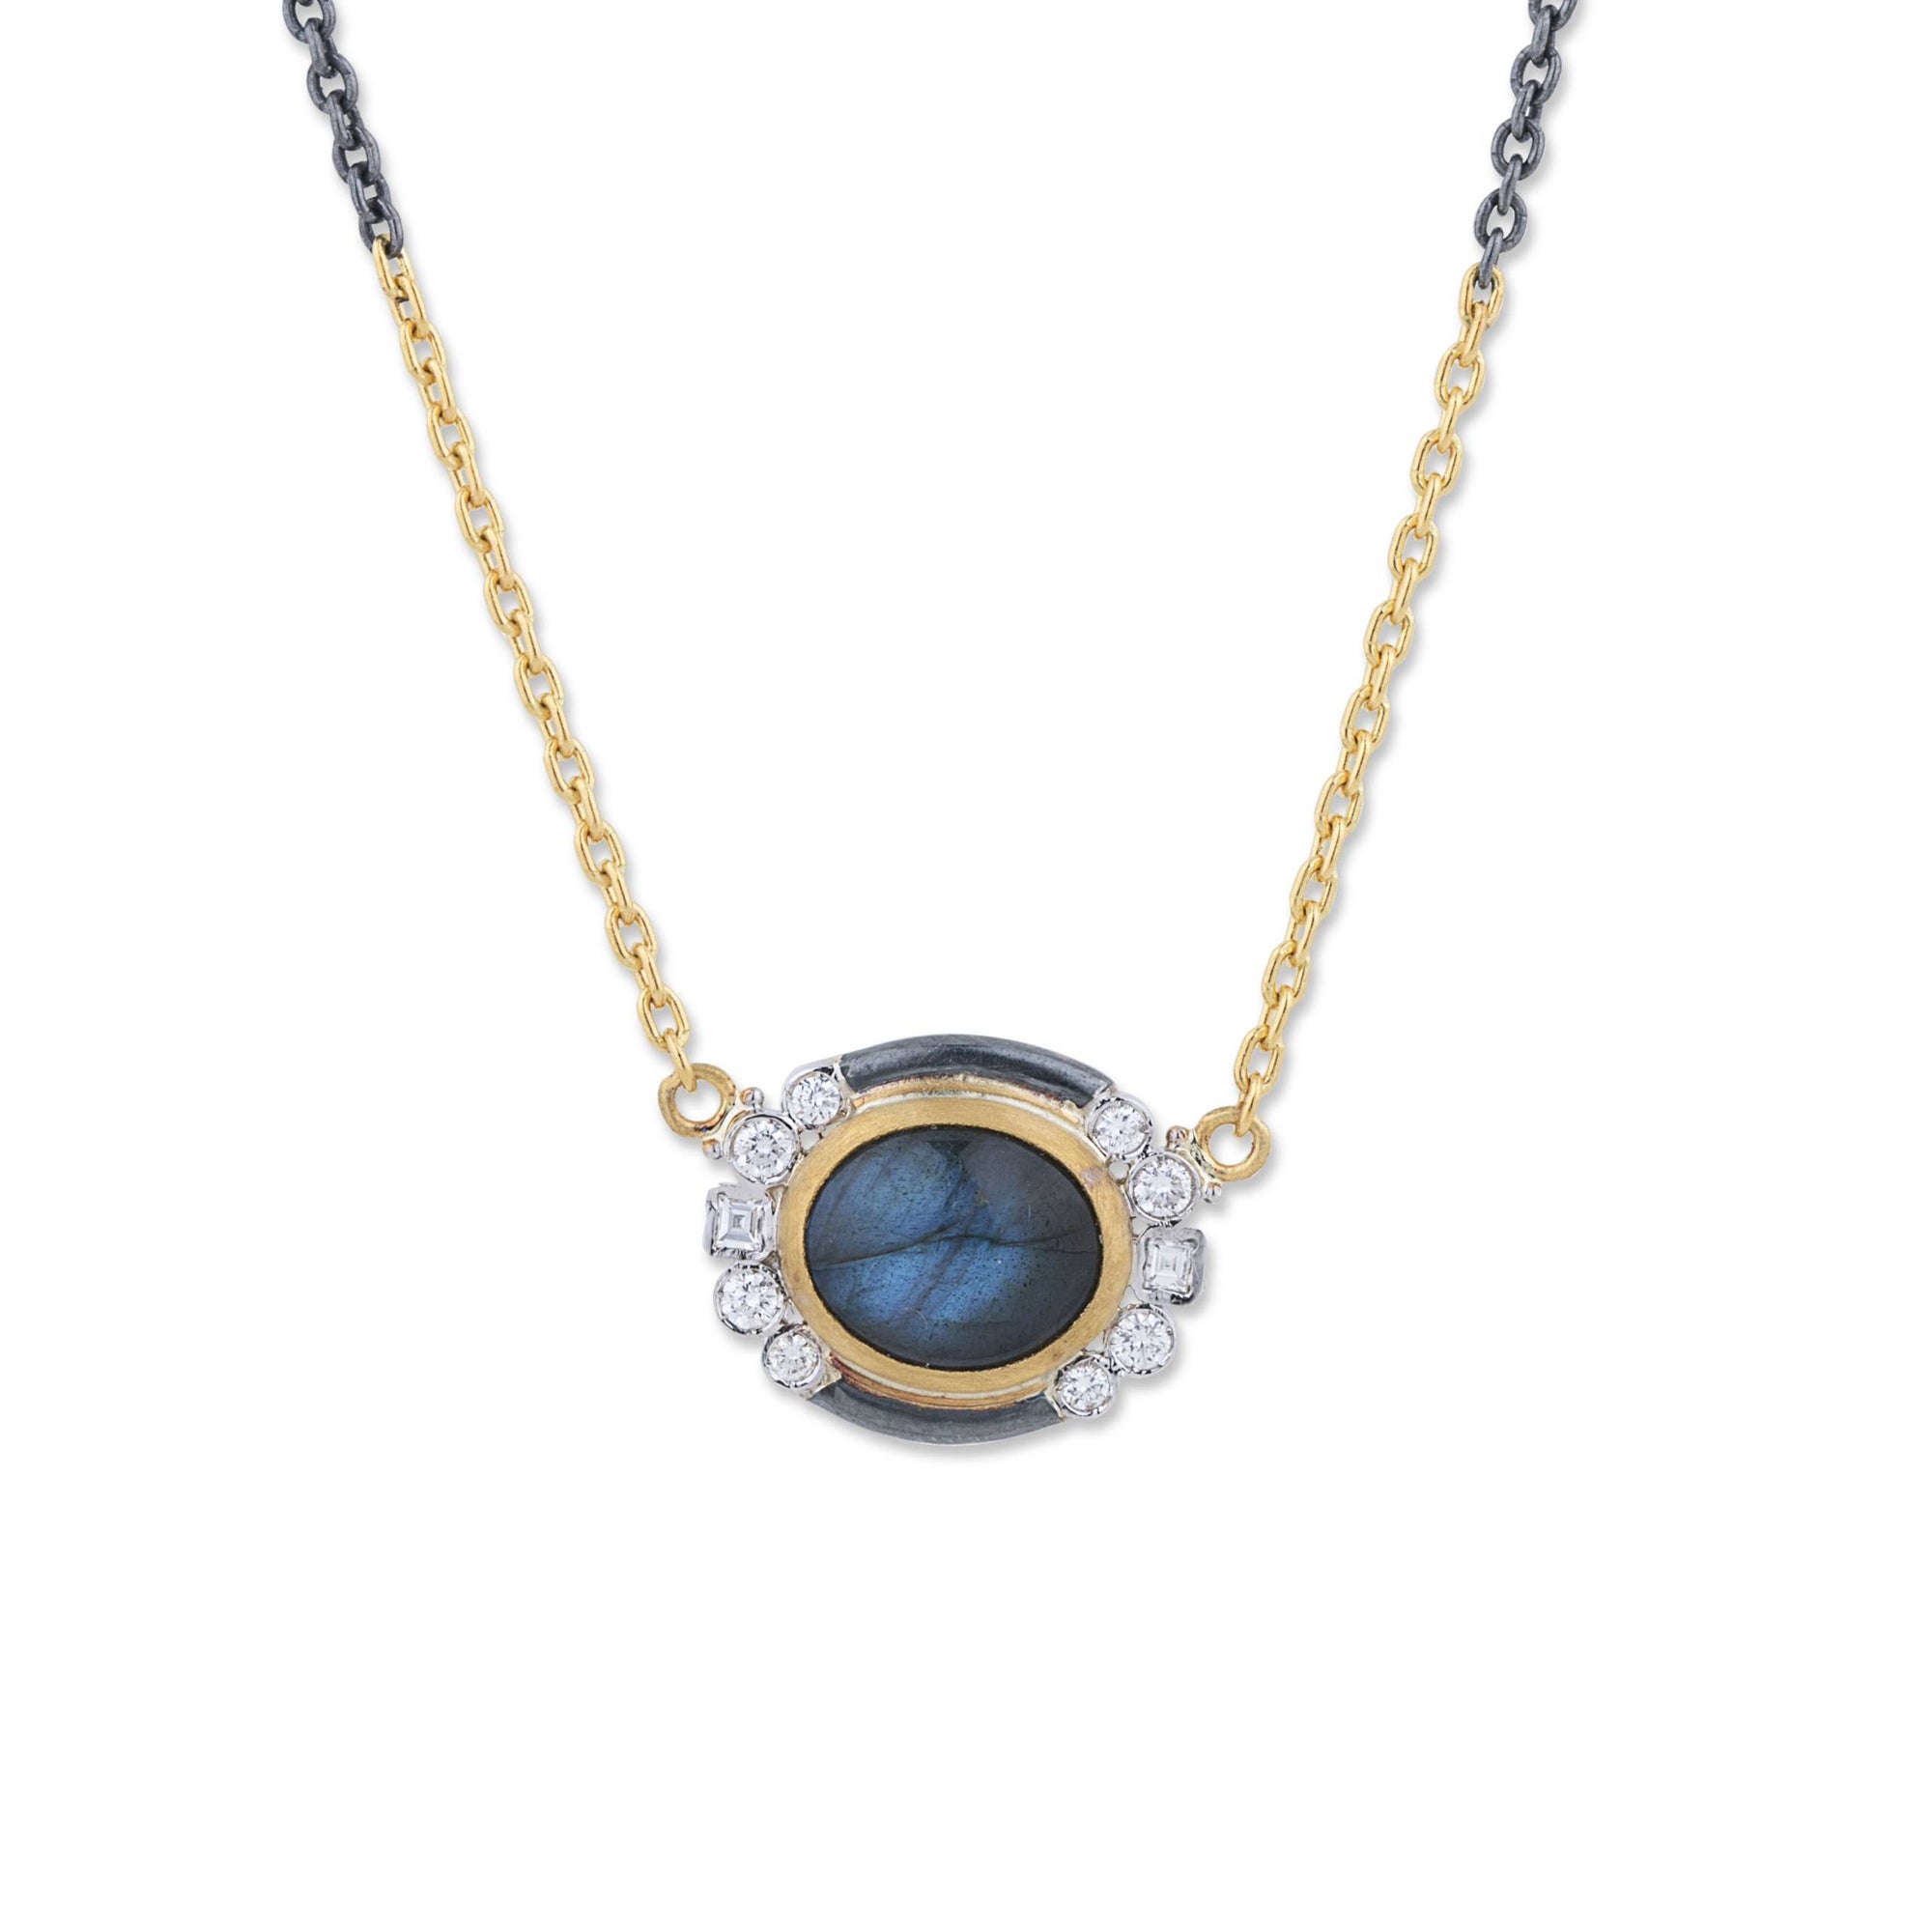 Lika Behar 24K Gold & Oxidized Silver “Deck” Labradorite & Diamond Necklace